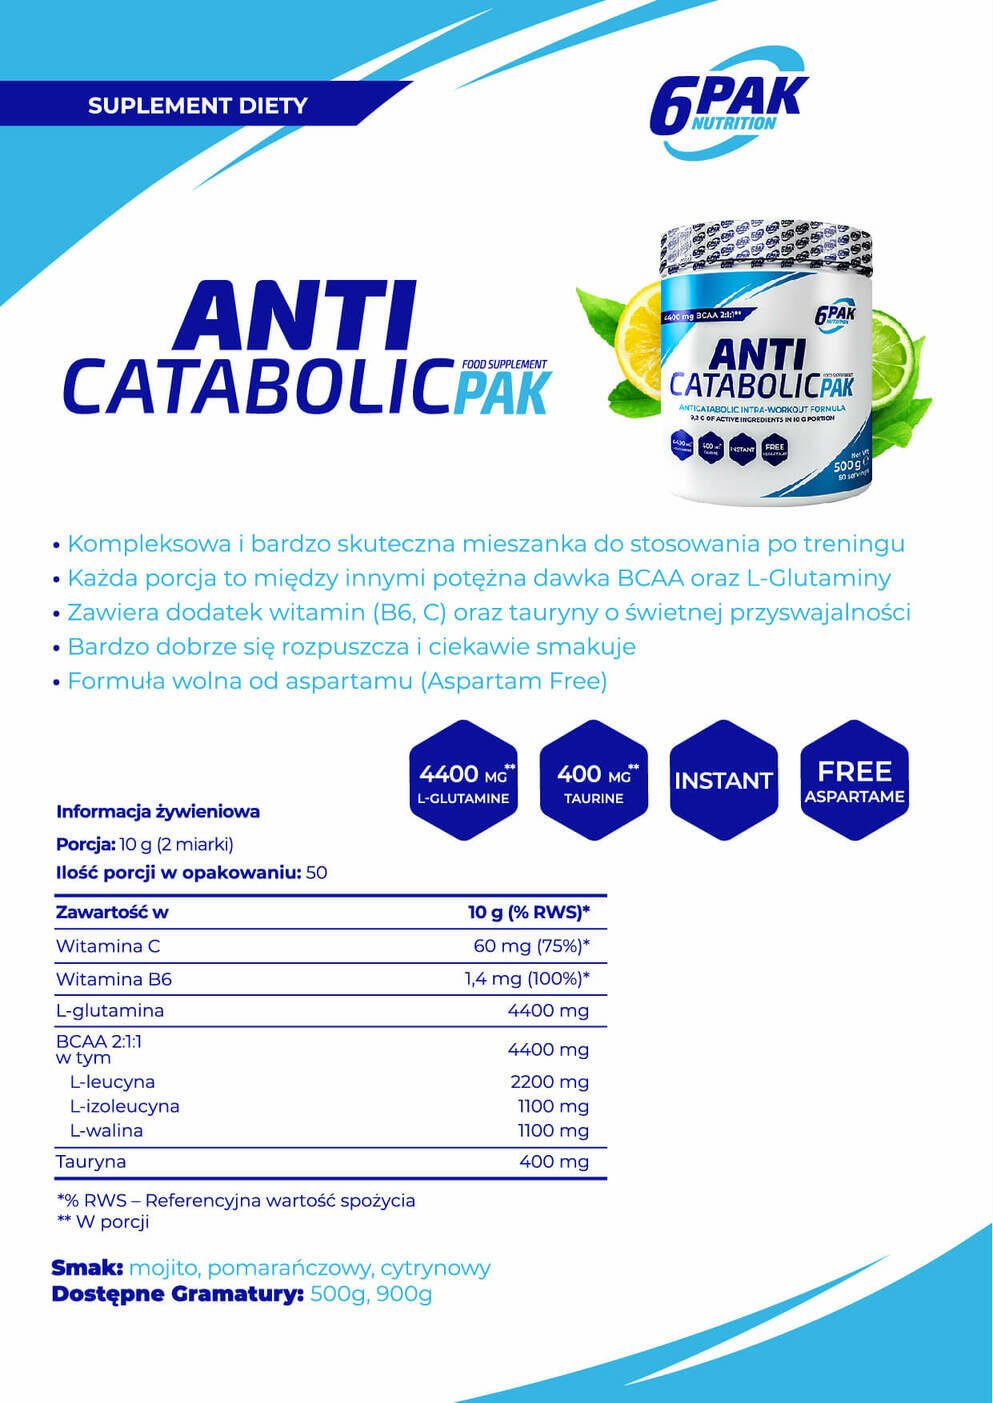 6PAK Nutrition Anticatabolic PAK - 900g